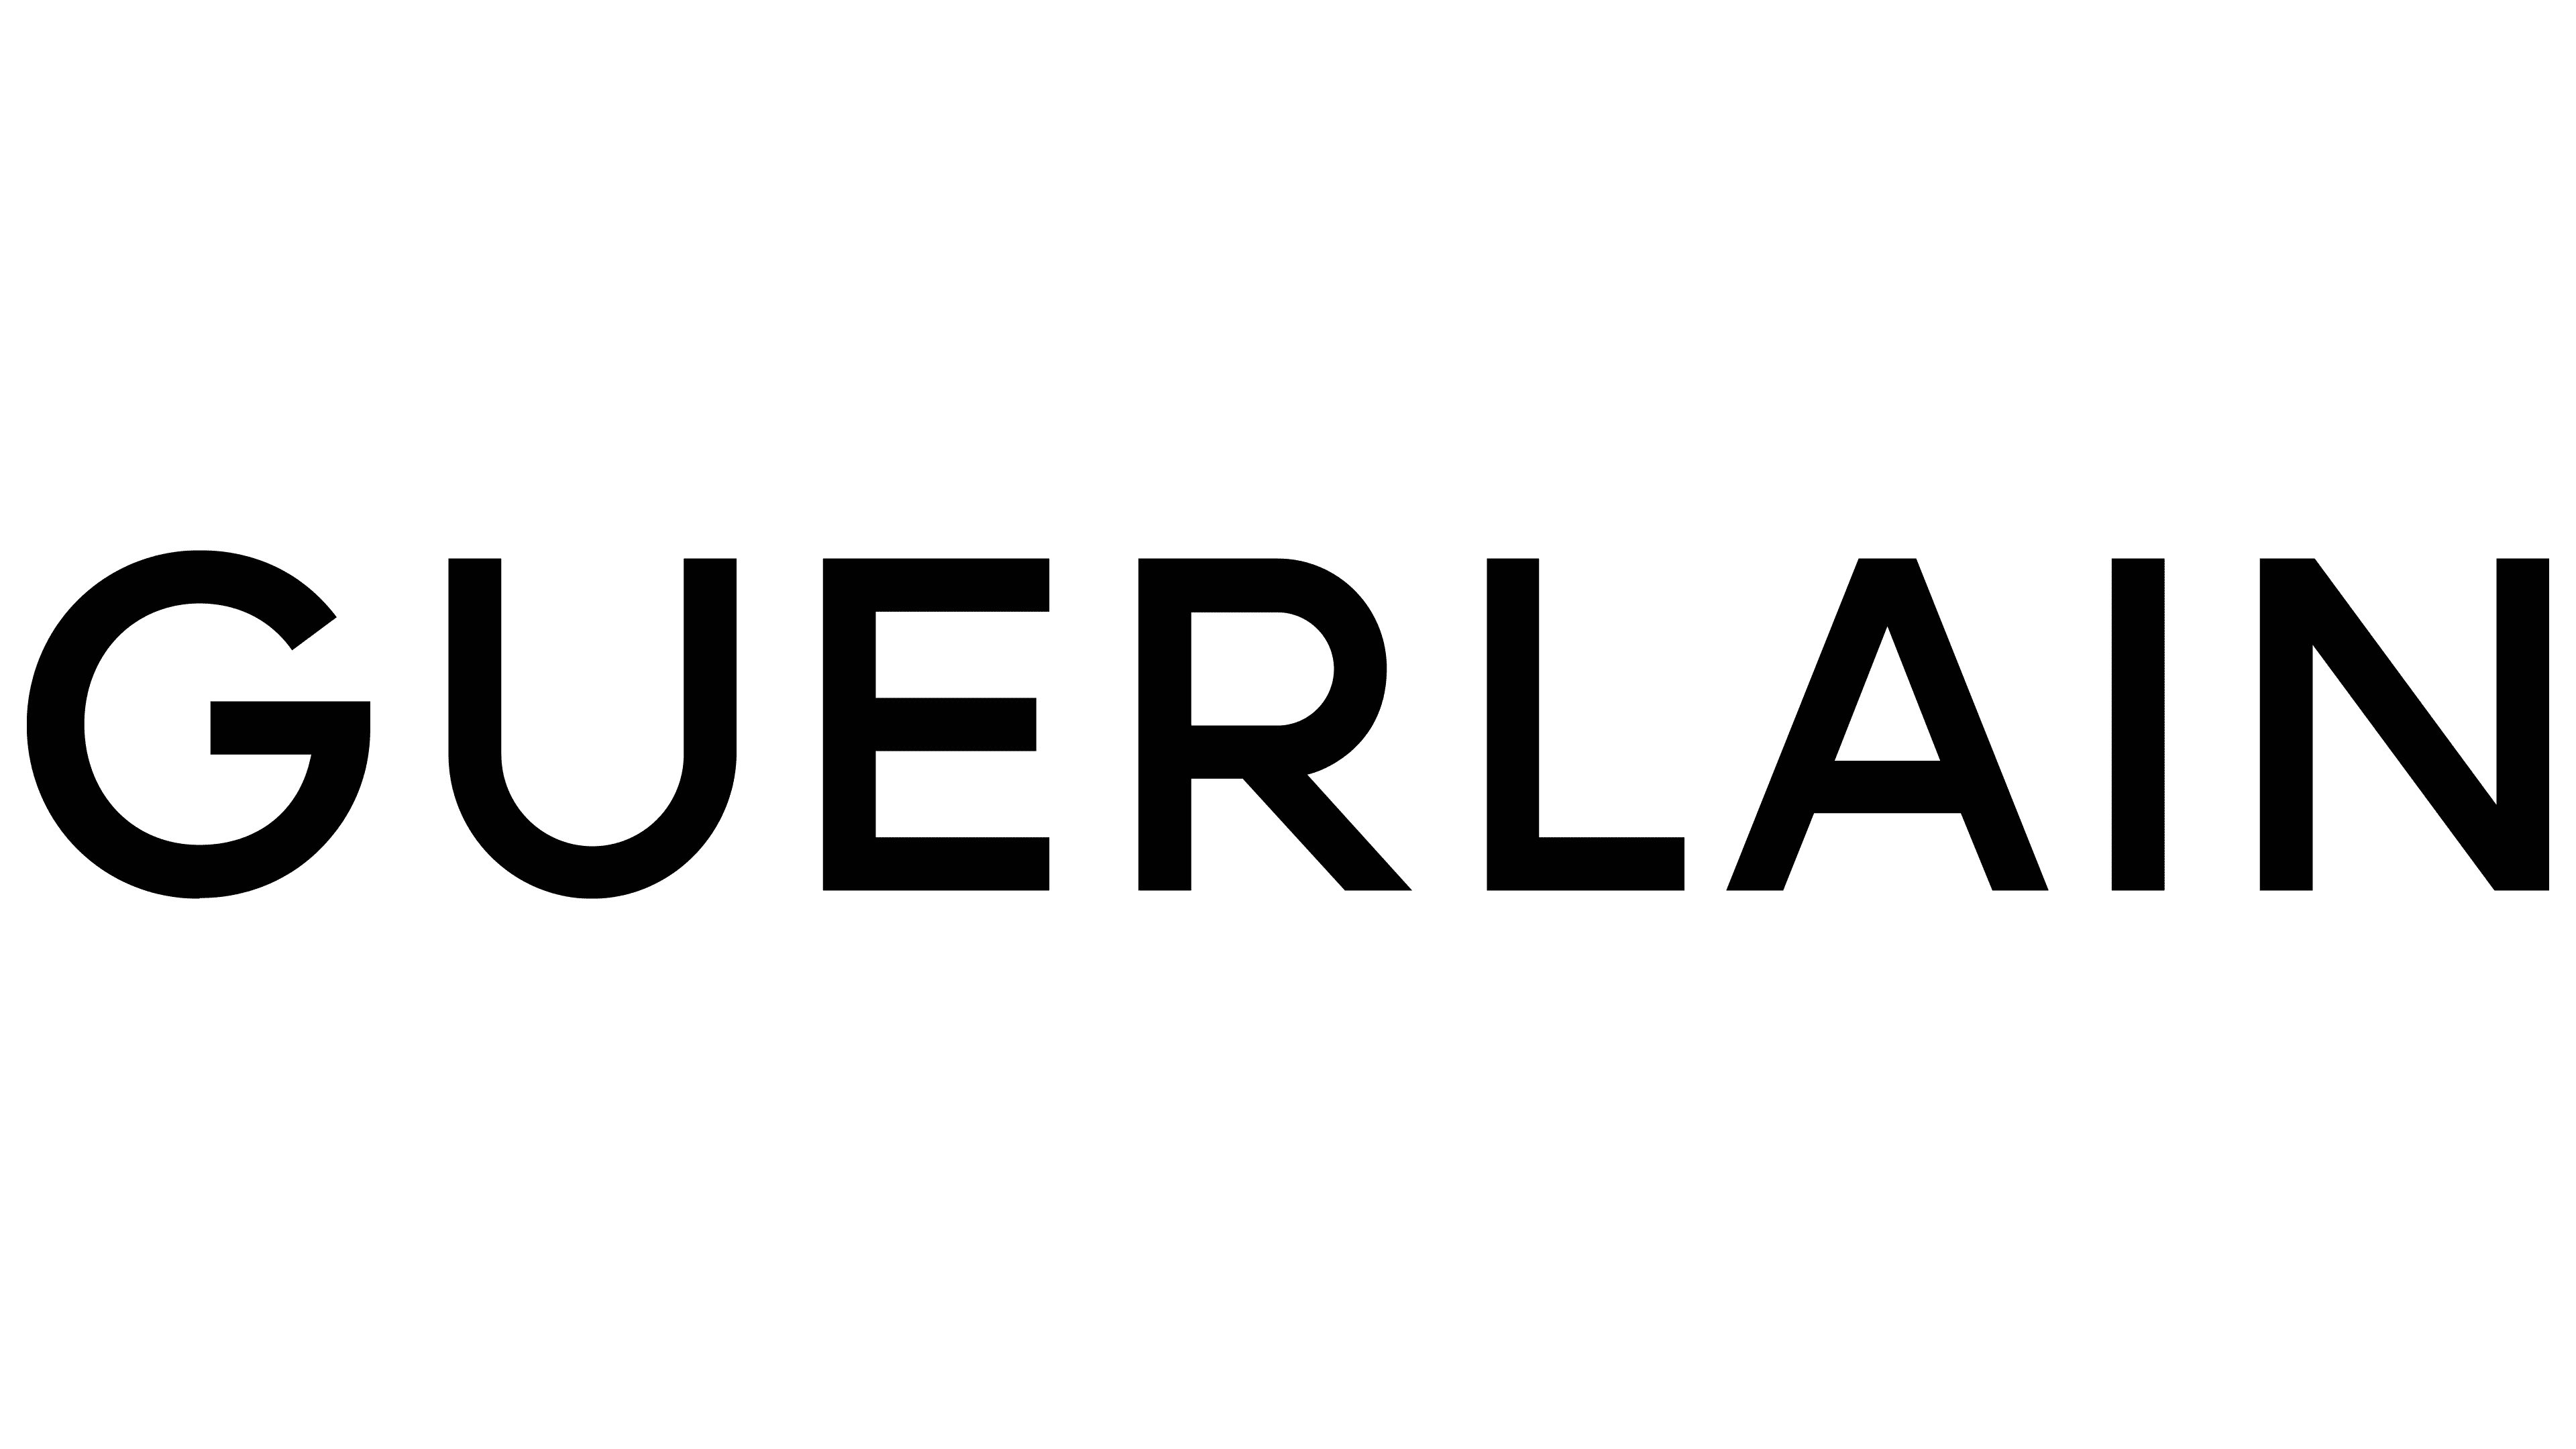 Guerlain Logo